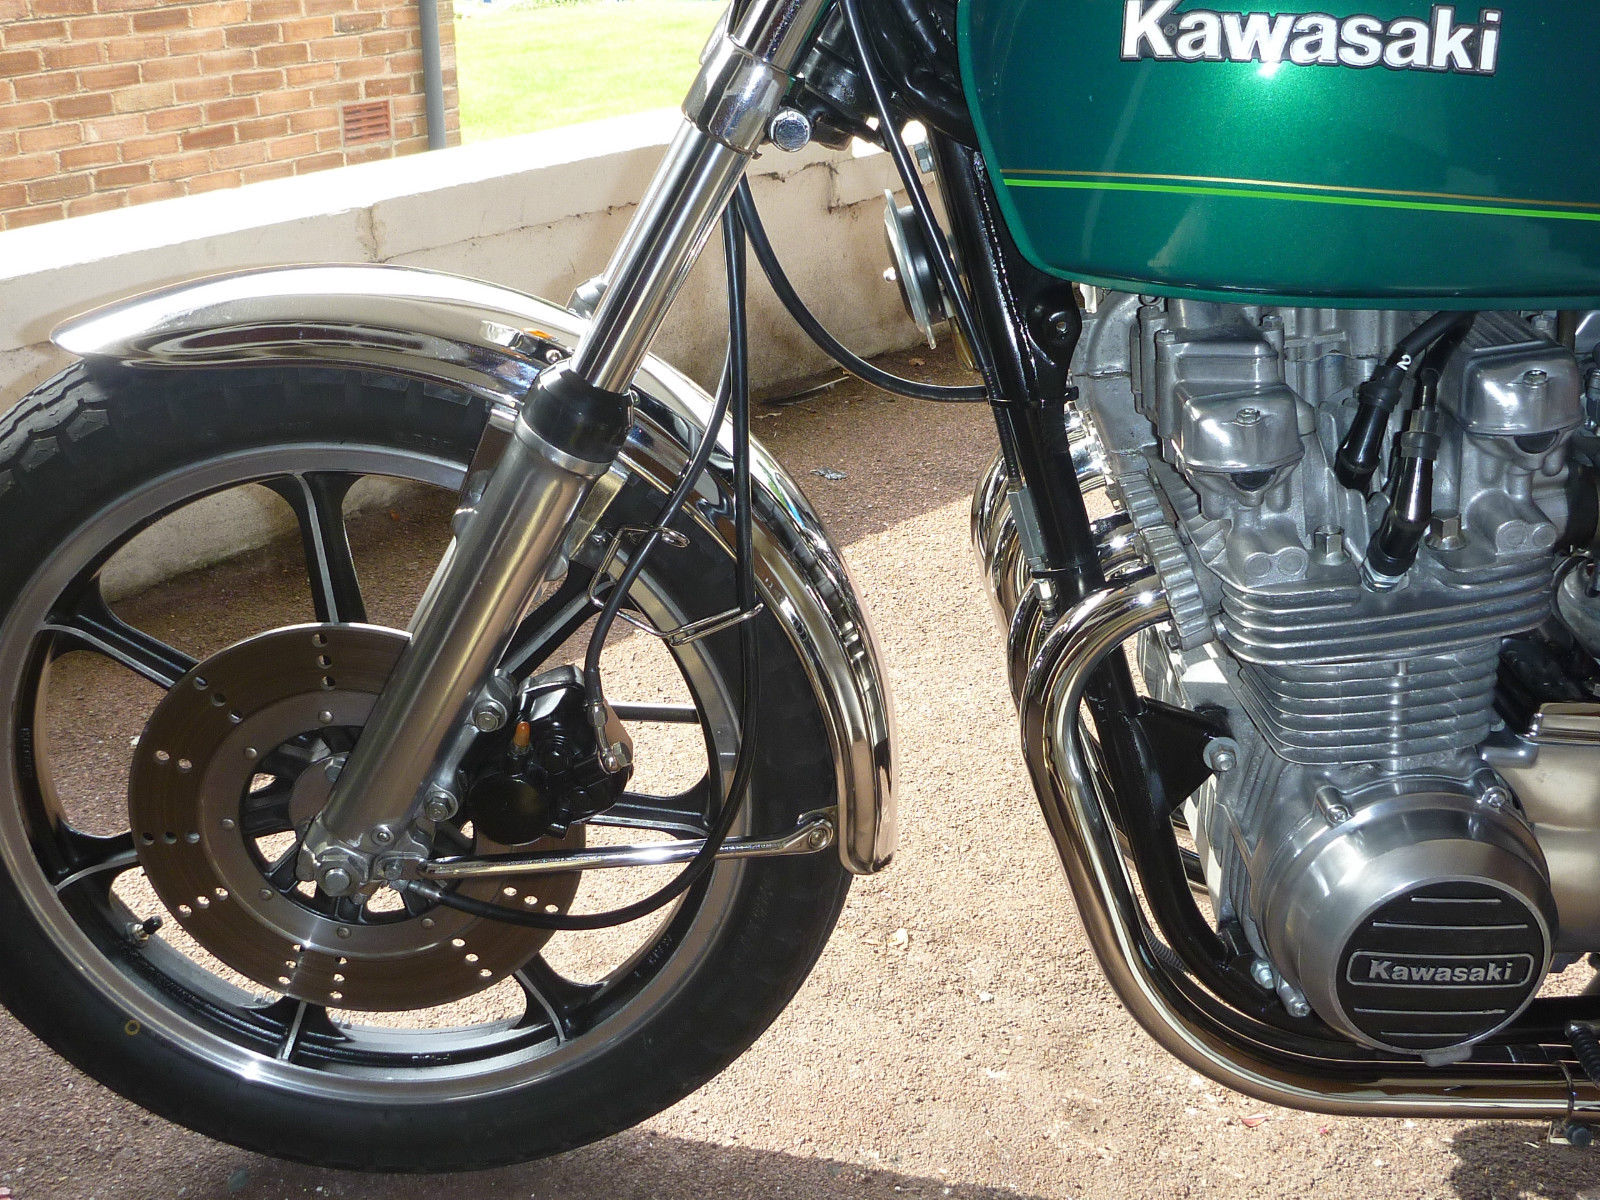 Geologi sommer aborre Restored Kawasaki Z650 - 1980 Photographs at Classic Bikes Restored |Bikes  Restored